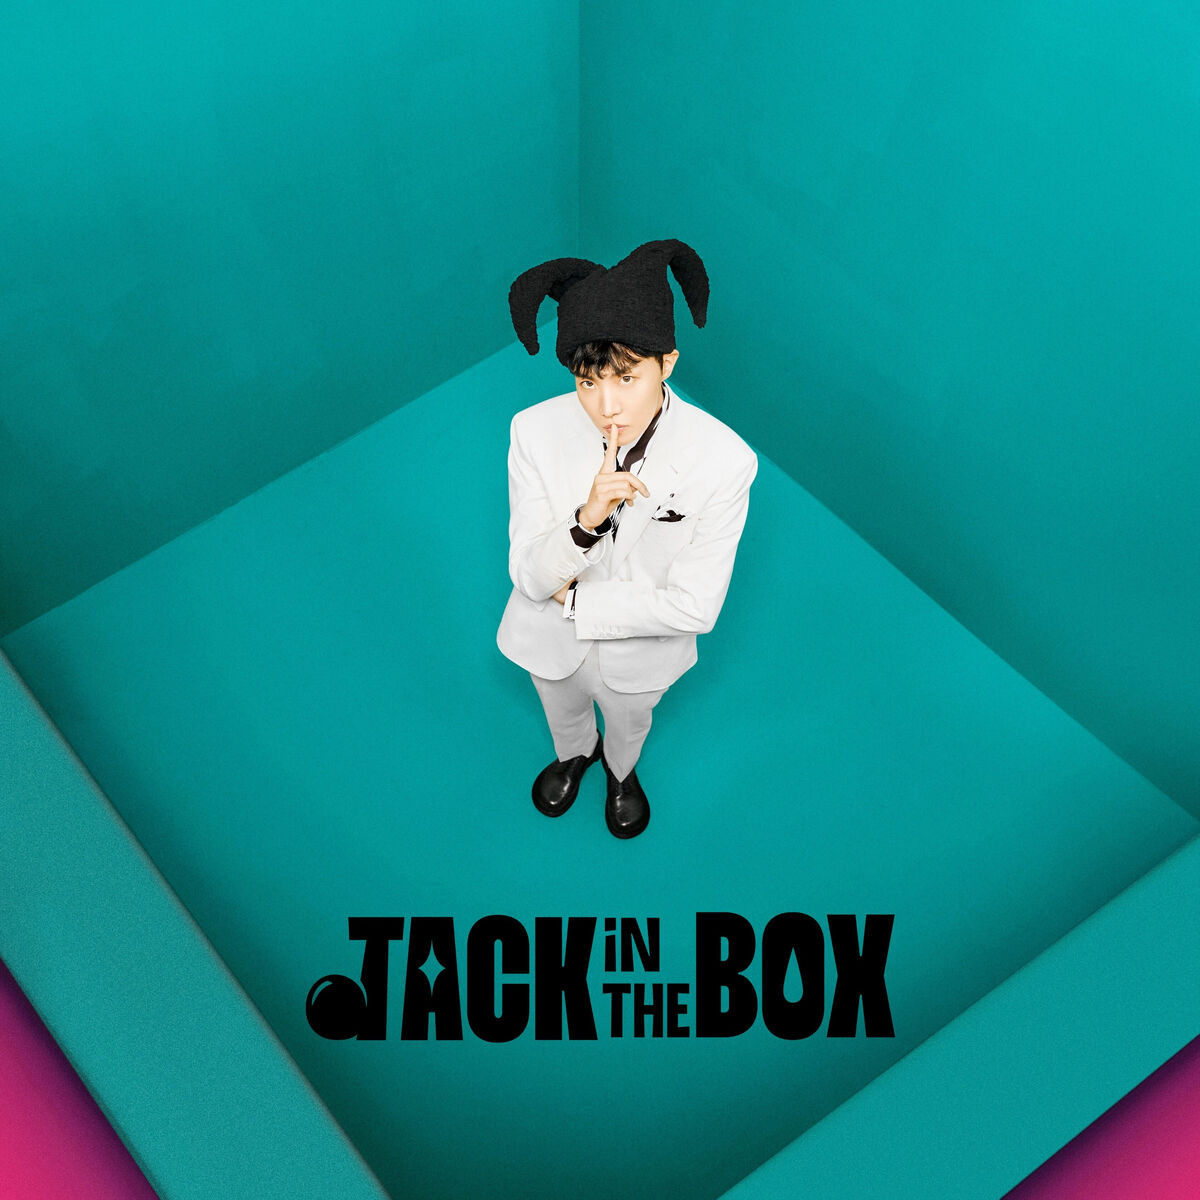 Jack In The Box/Gallery | BTS Wiki | Fandom